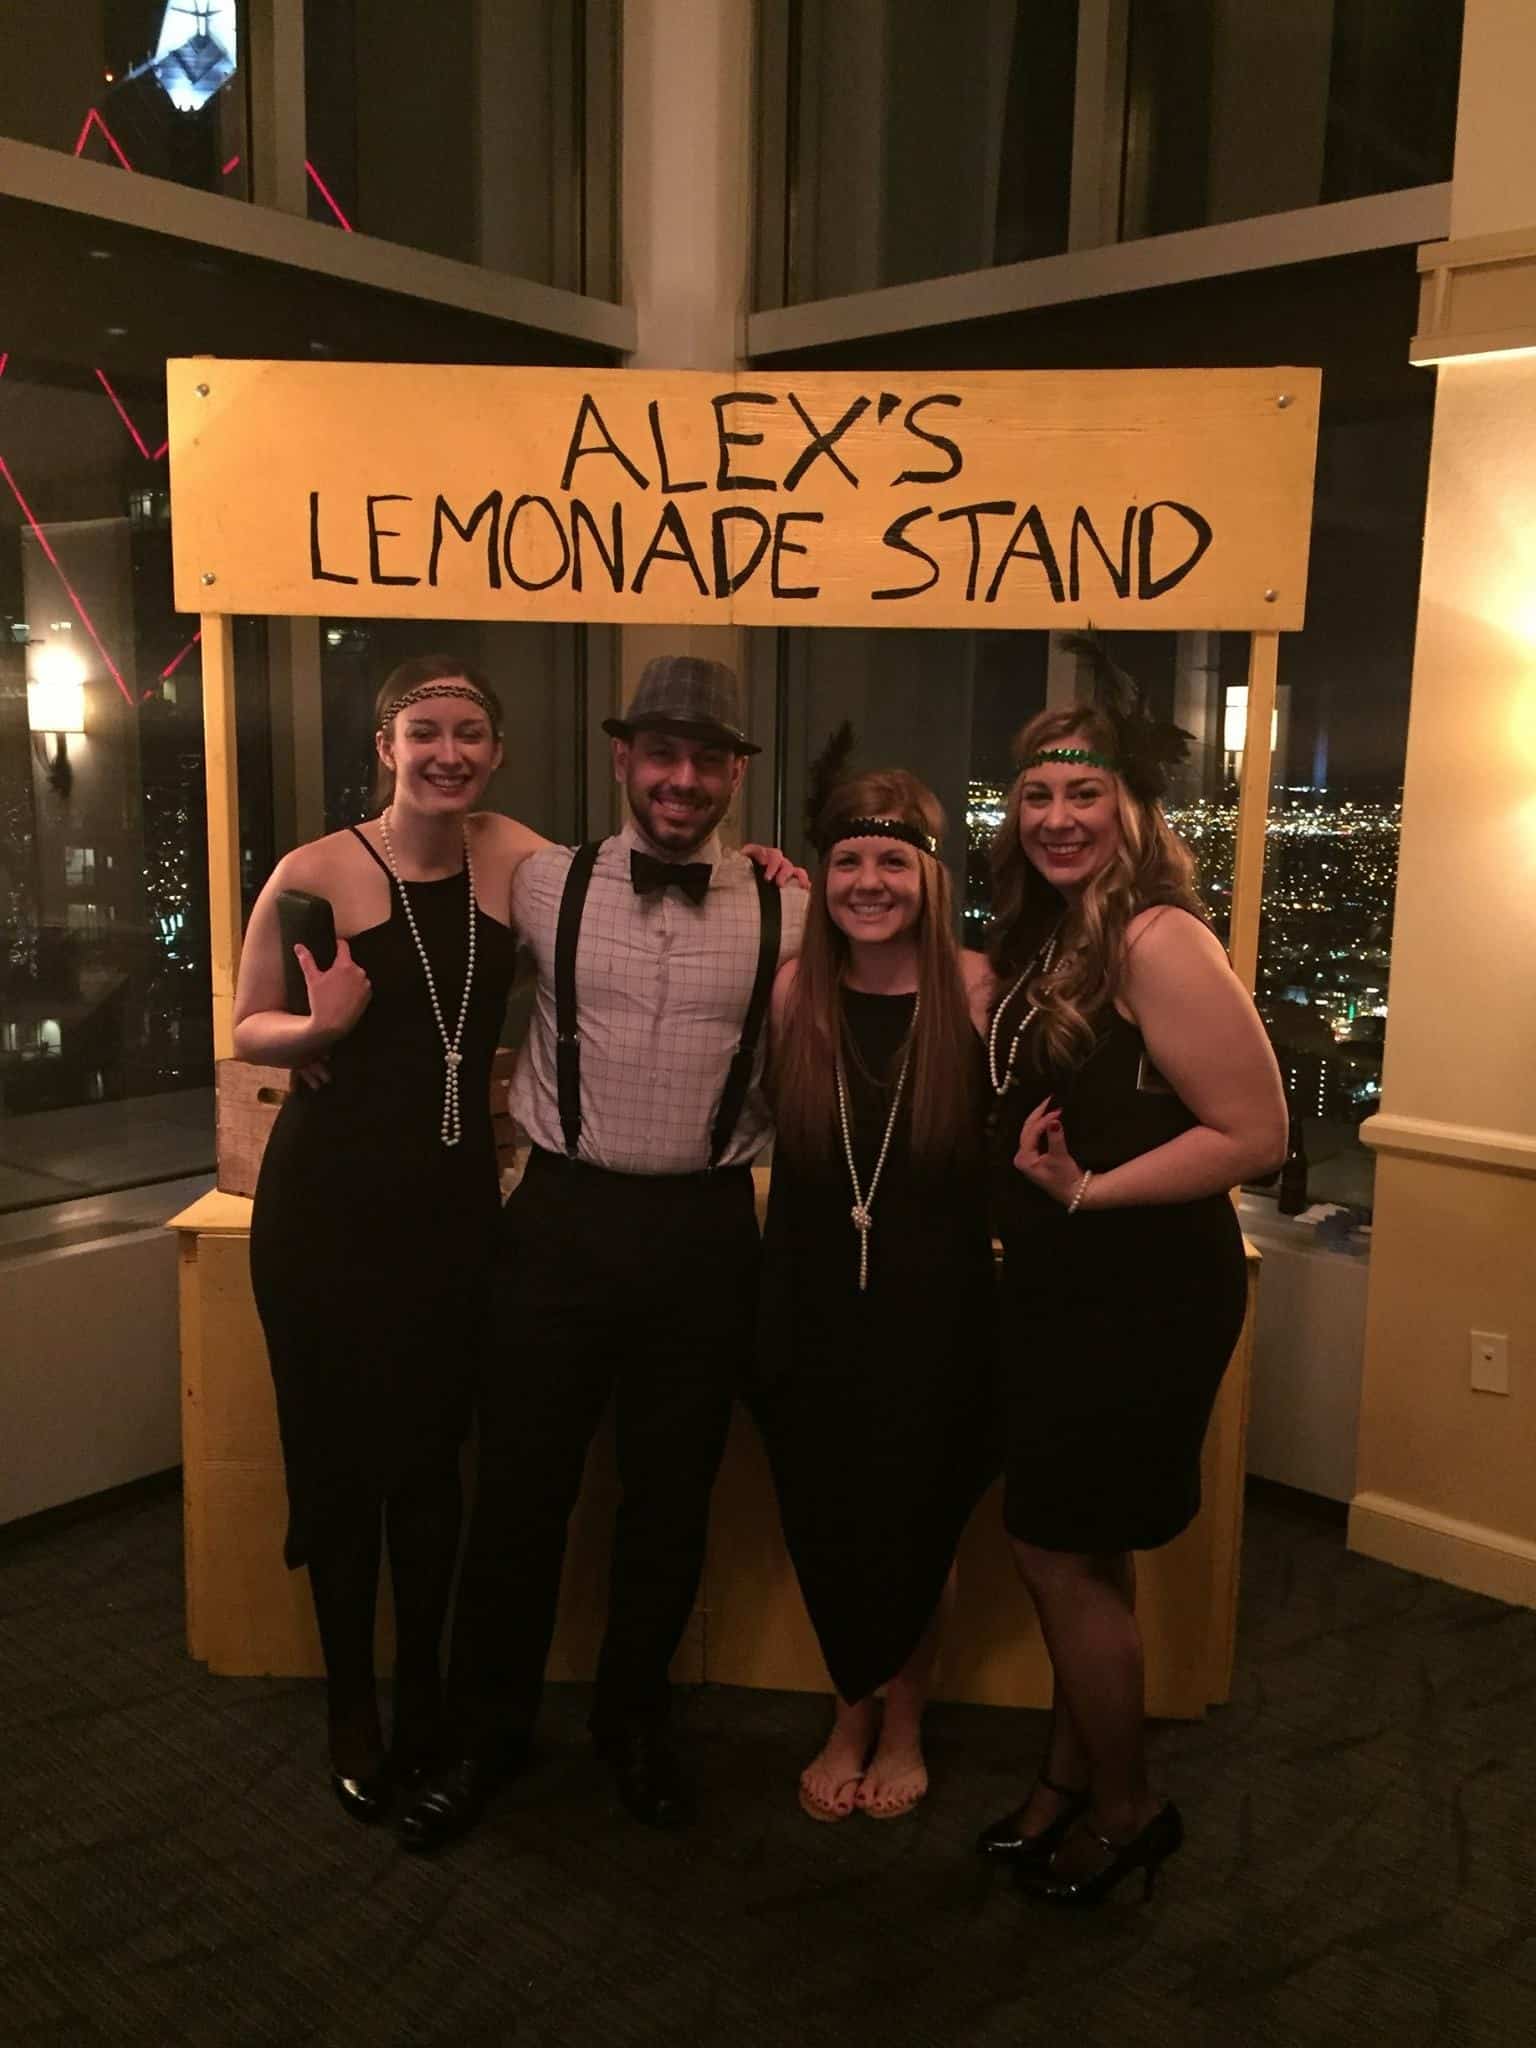 Alexs Lemonade Stand